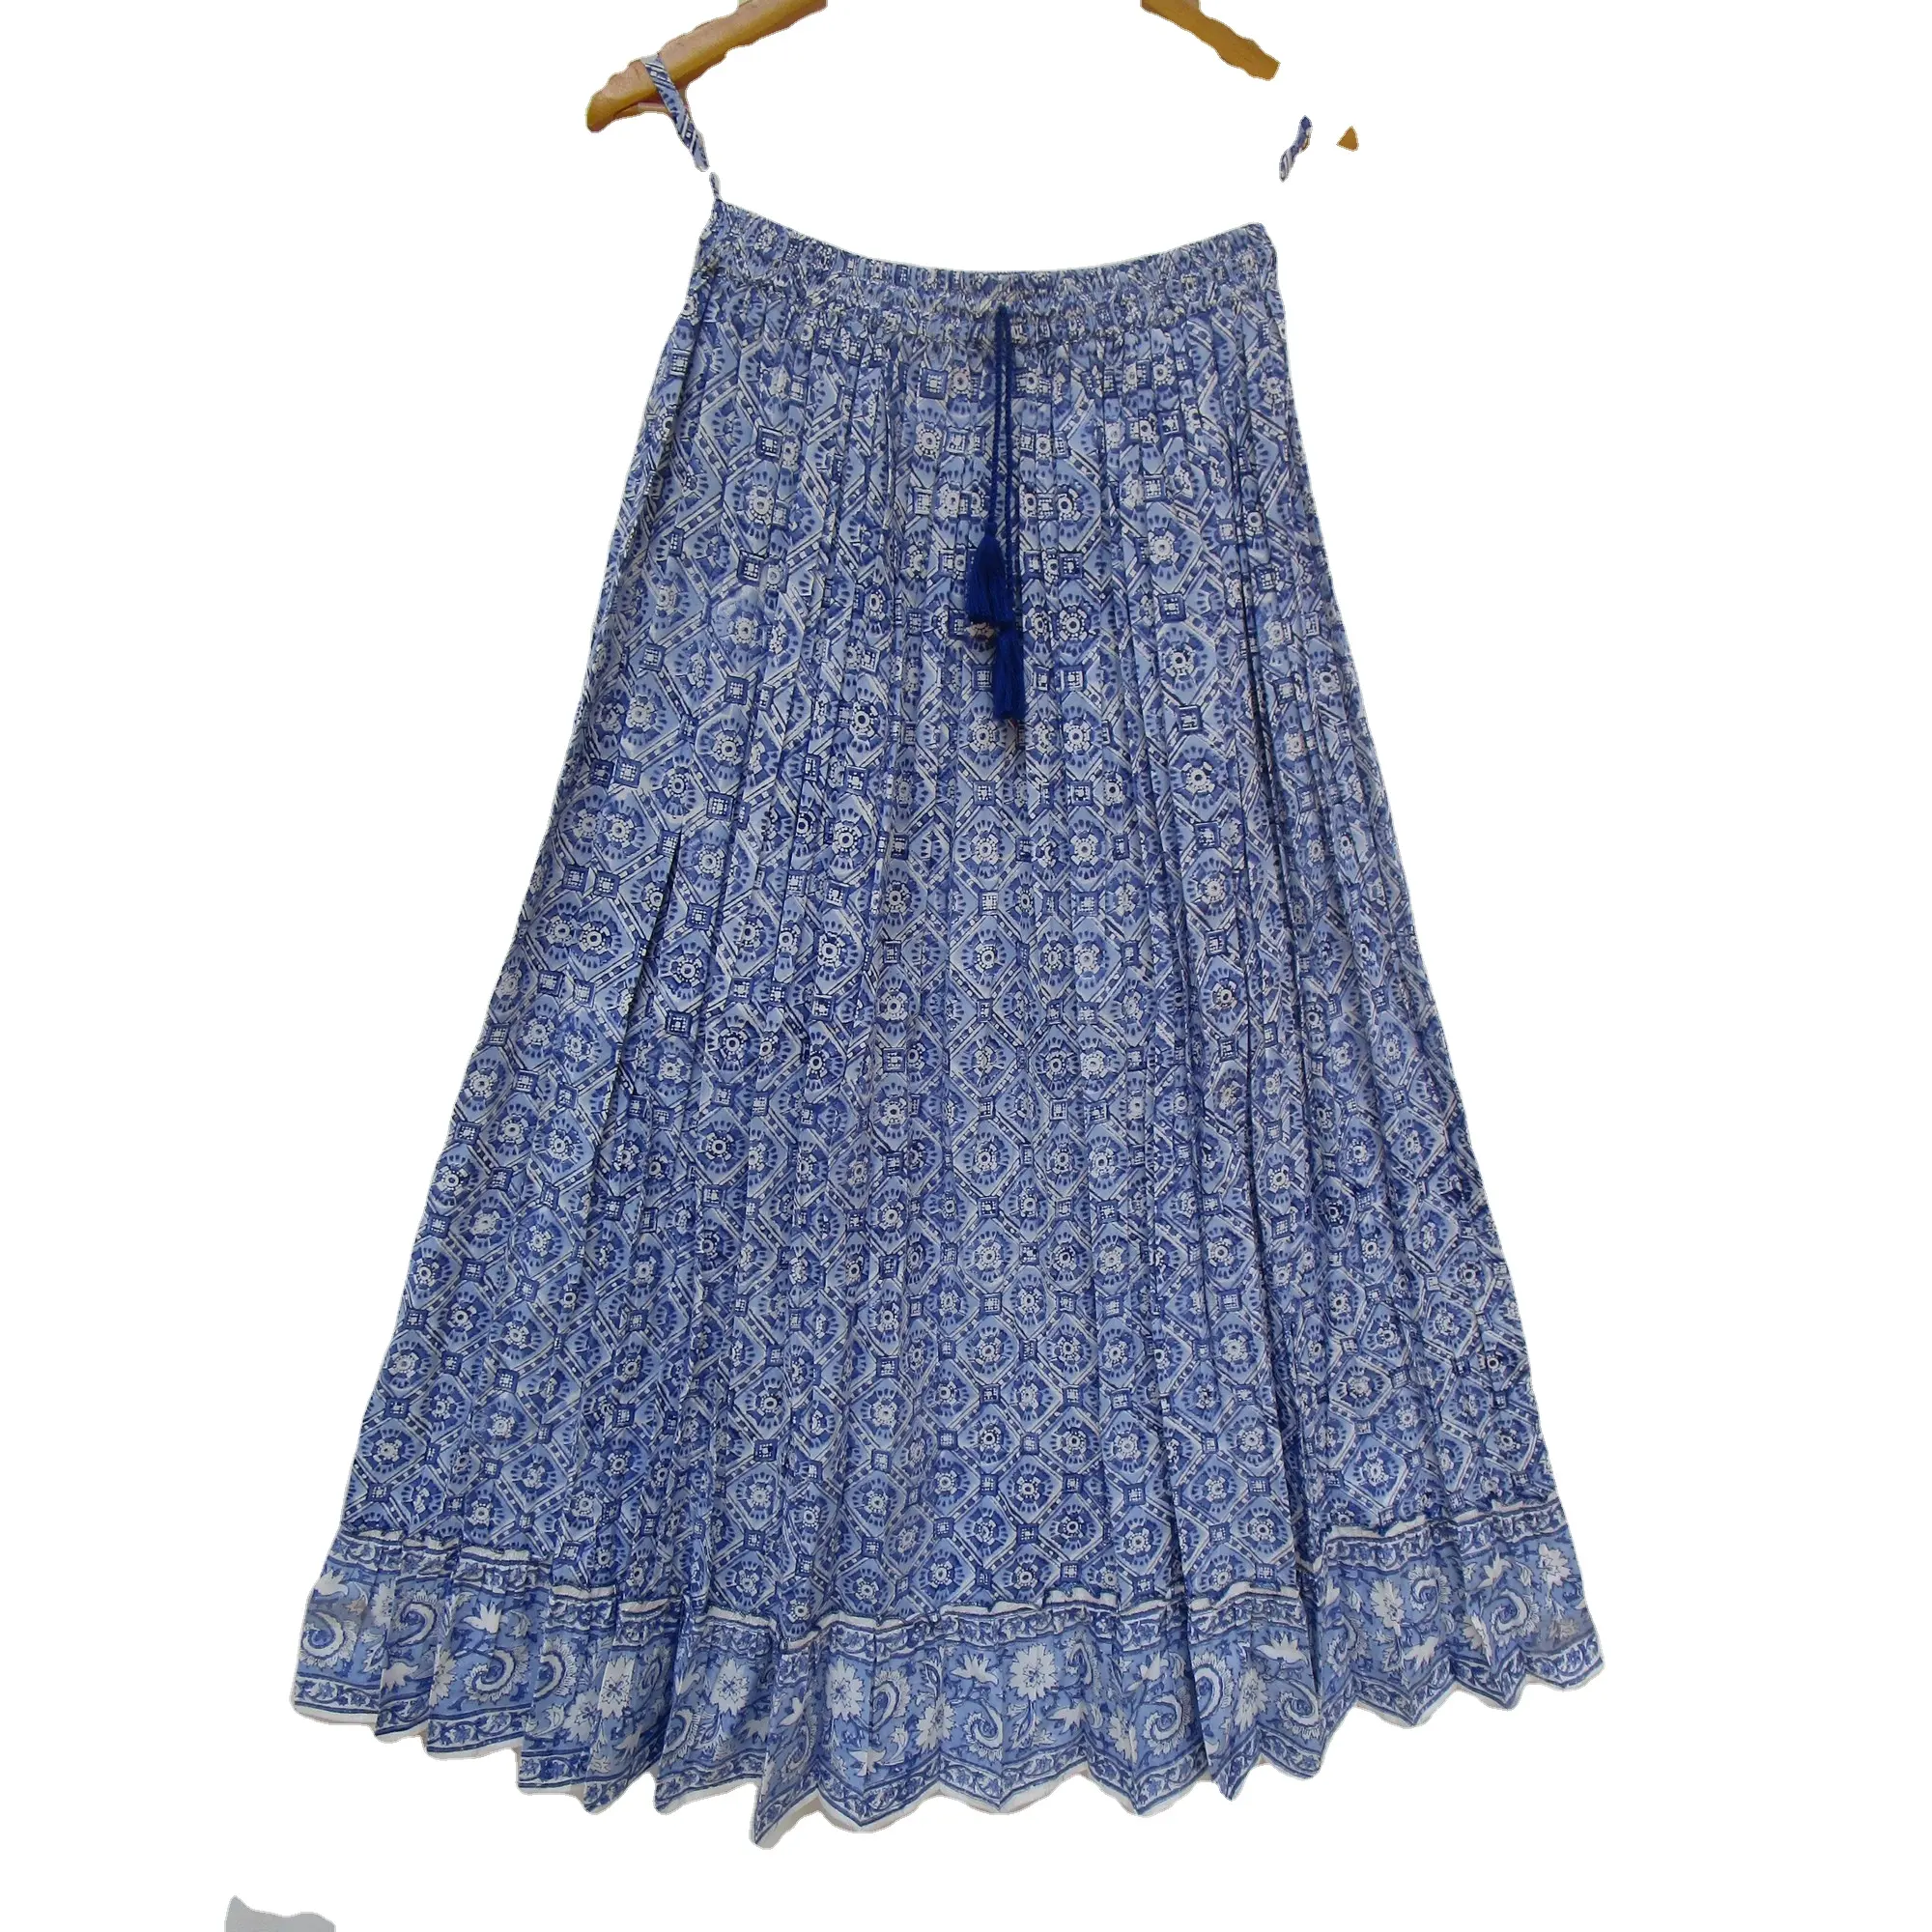 Cotton blue ditsy floral print women's wear long A-line skirt - travel wear cotton maxi skirts